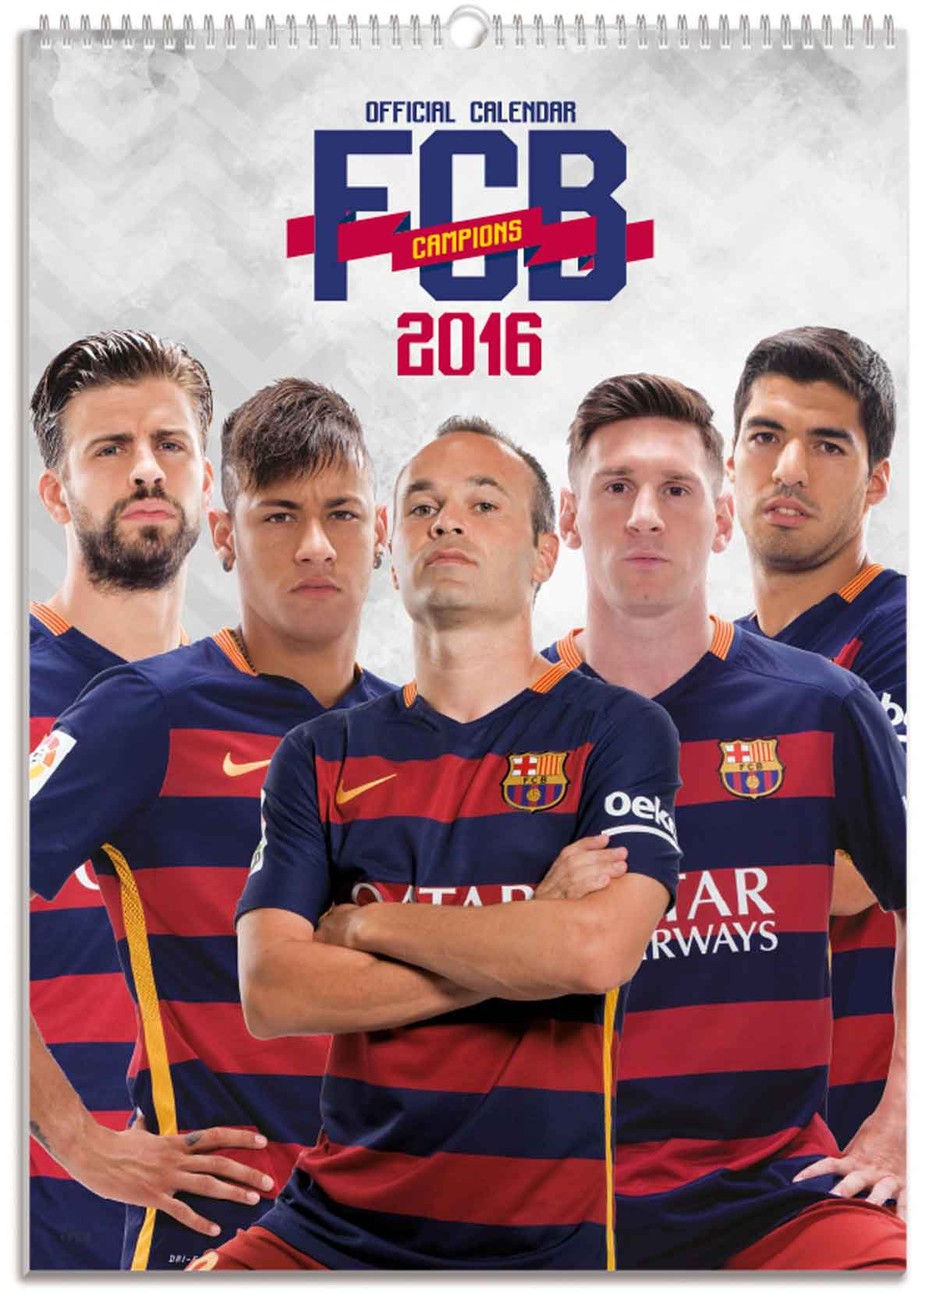 FC Barcelona - Wall Calendars | Buy at Abposters.com